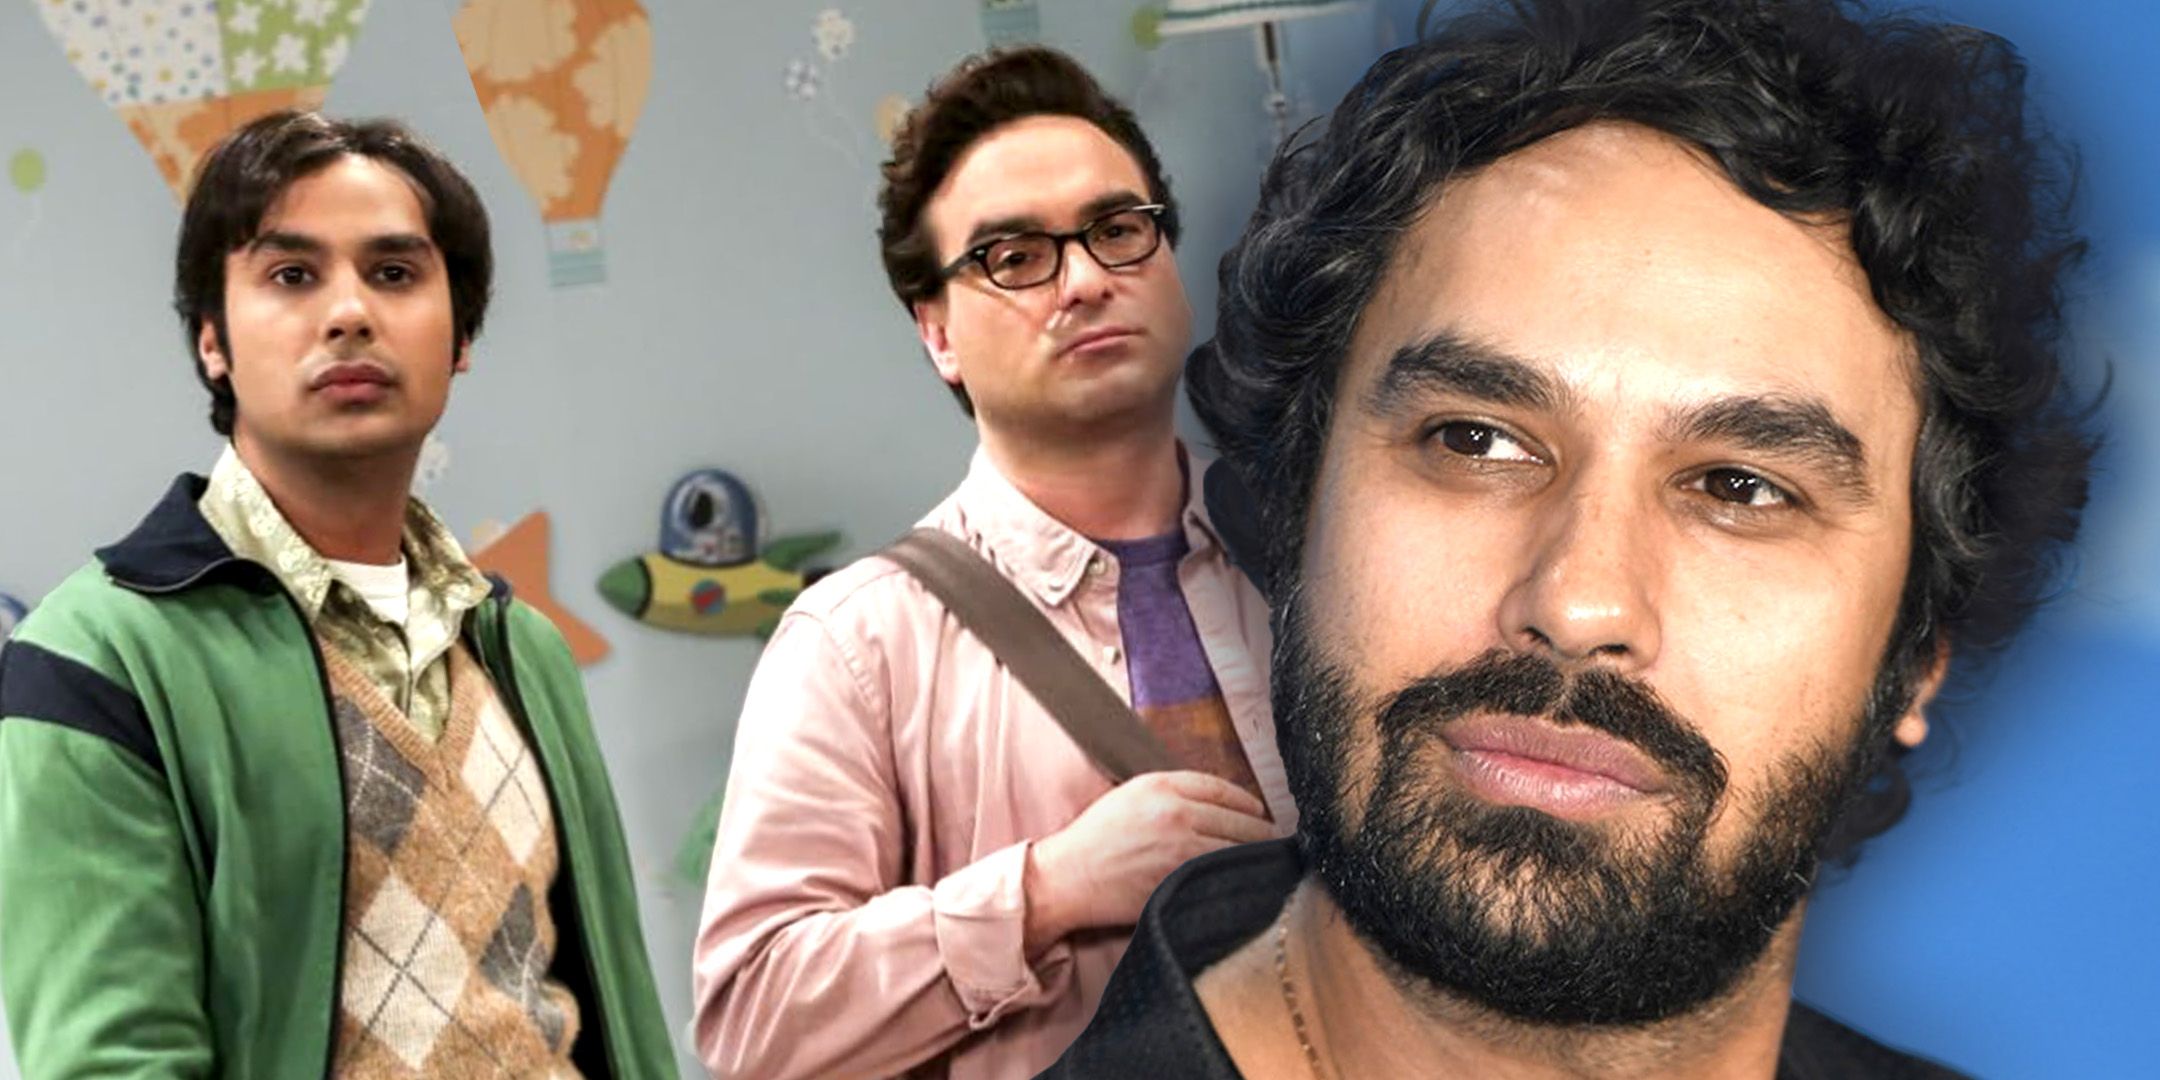 Big Bang Theory cast Kunal Nayyar and Johnny Galecki